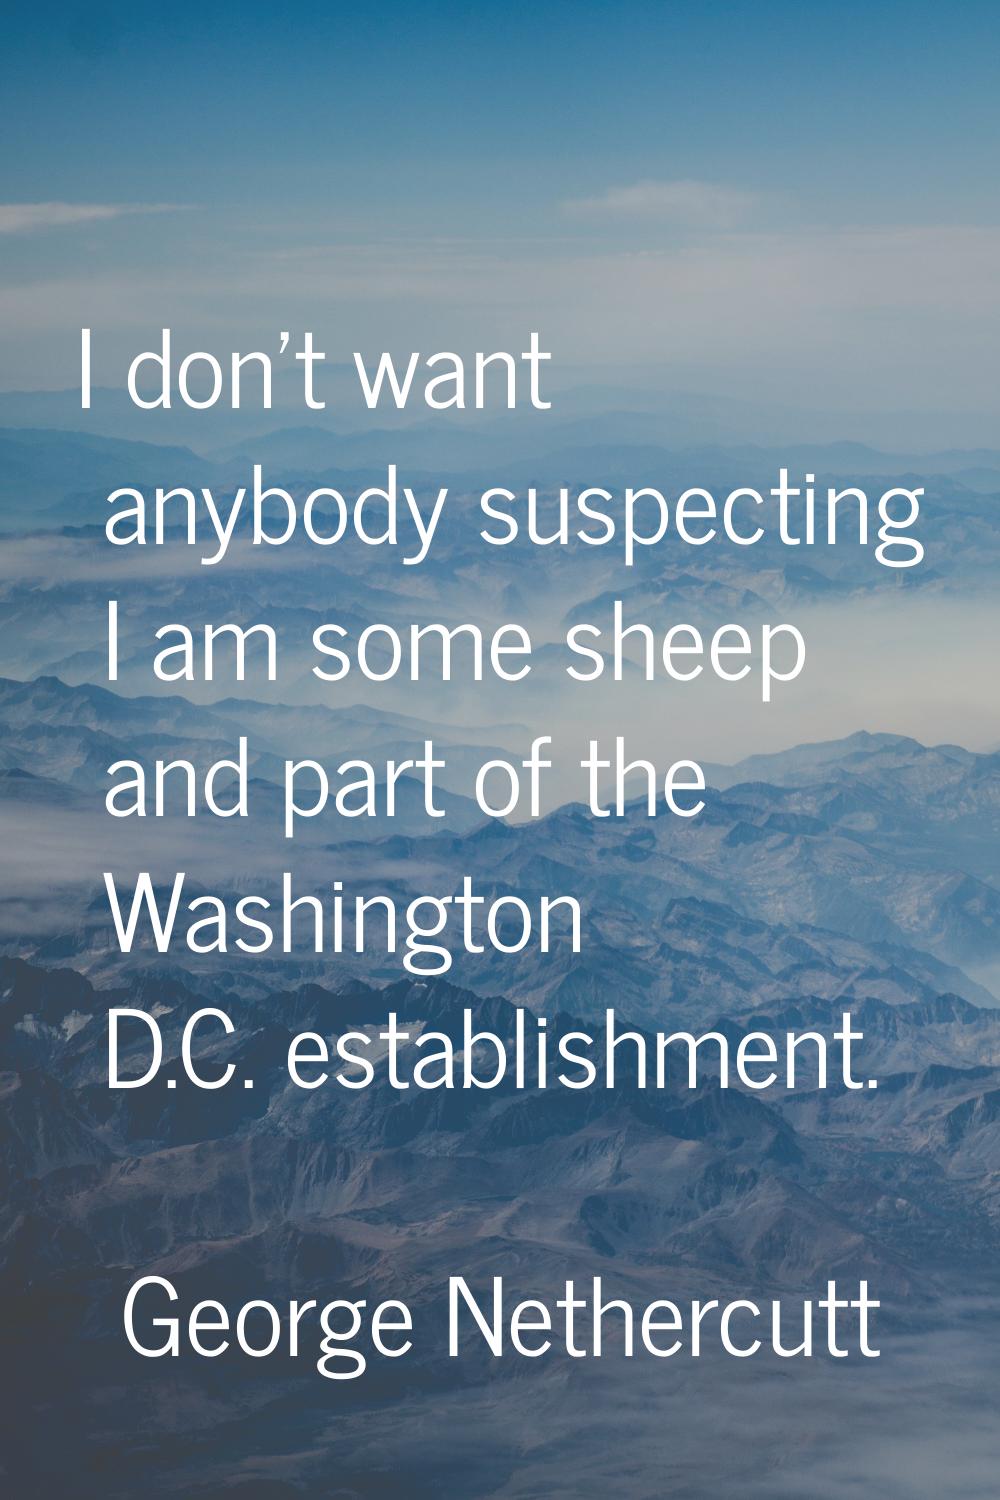 I don't want anybody suspecting I am some sheep and part of the Washington D.C. establishment.